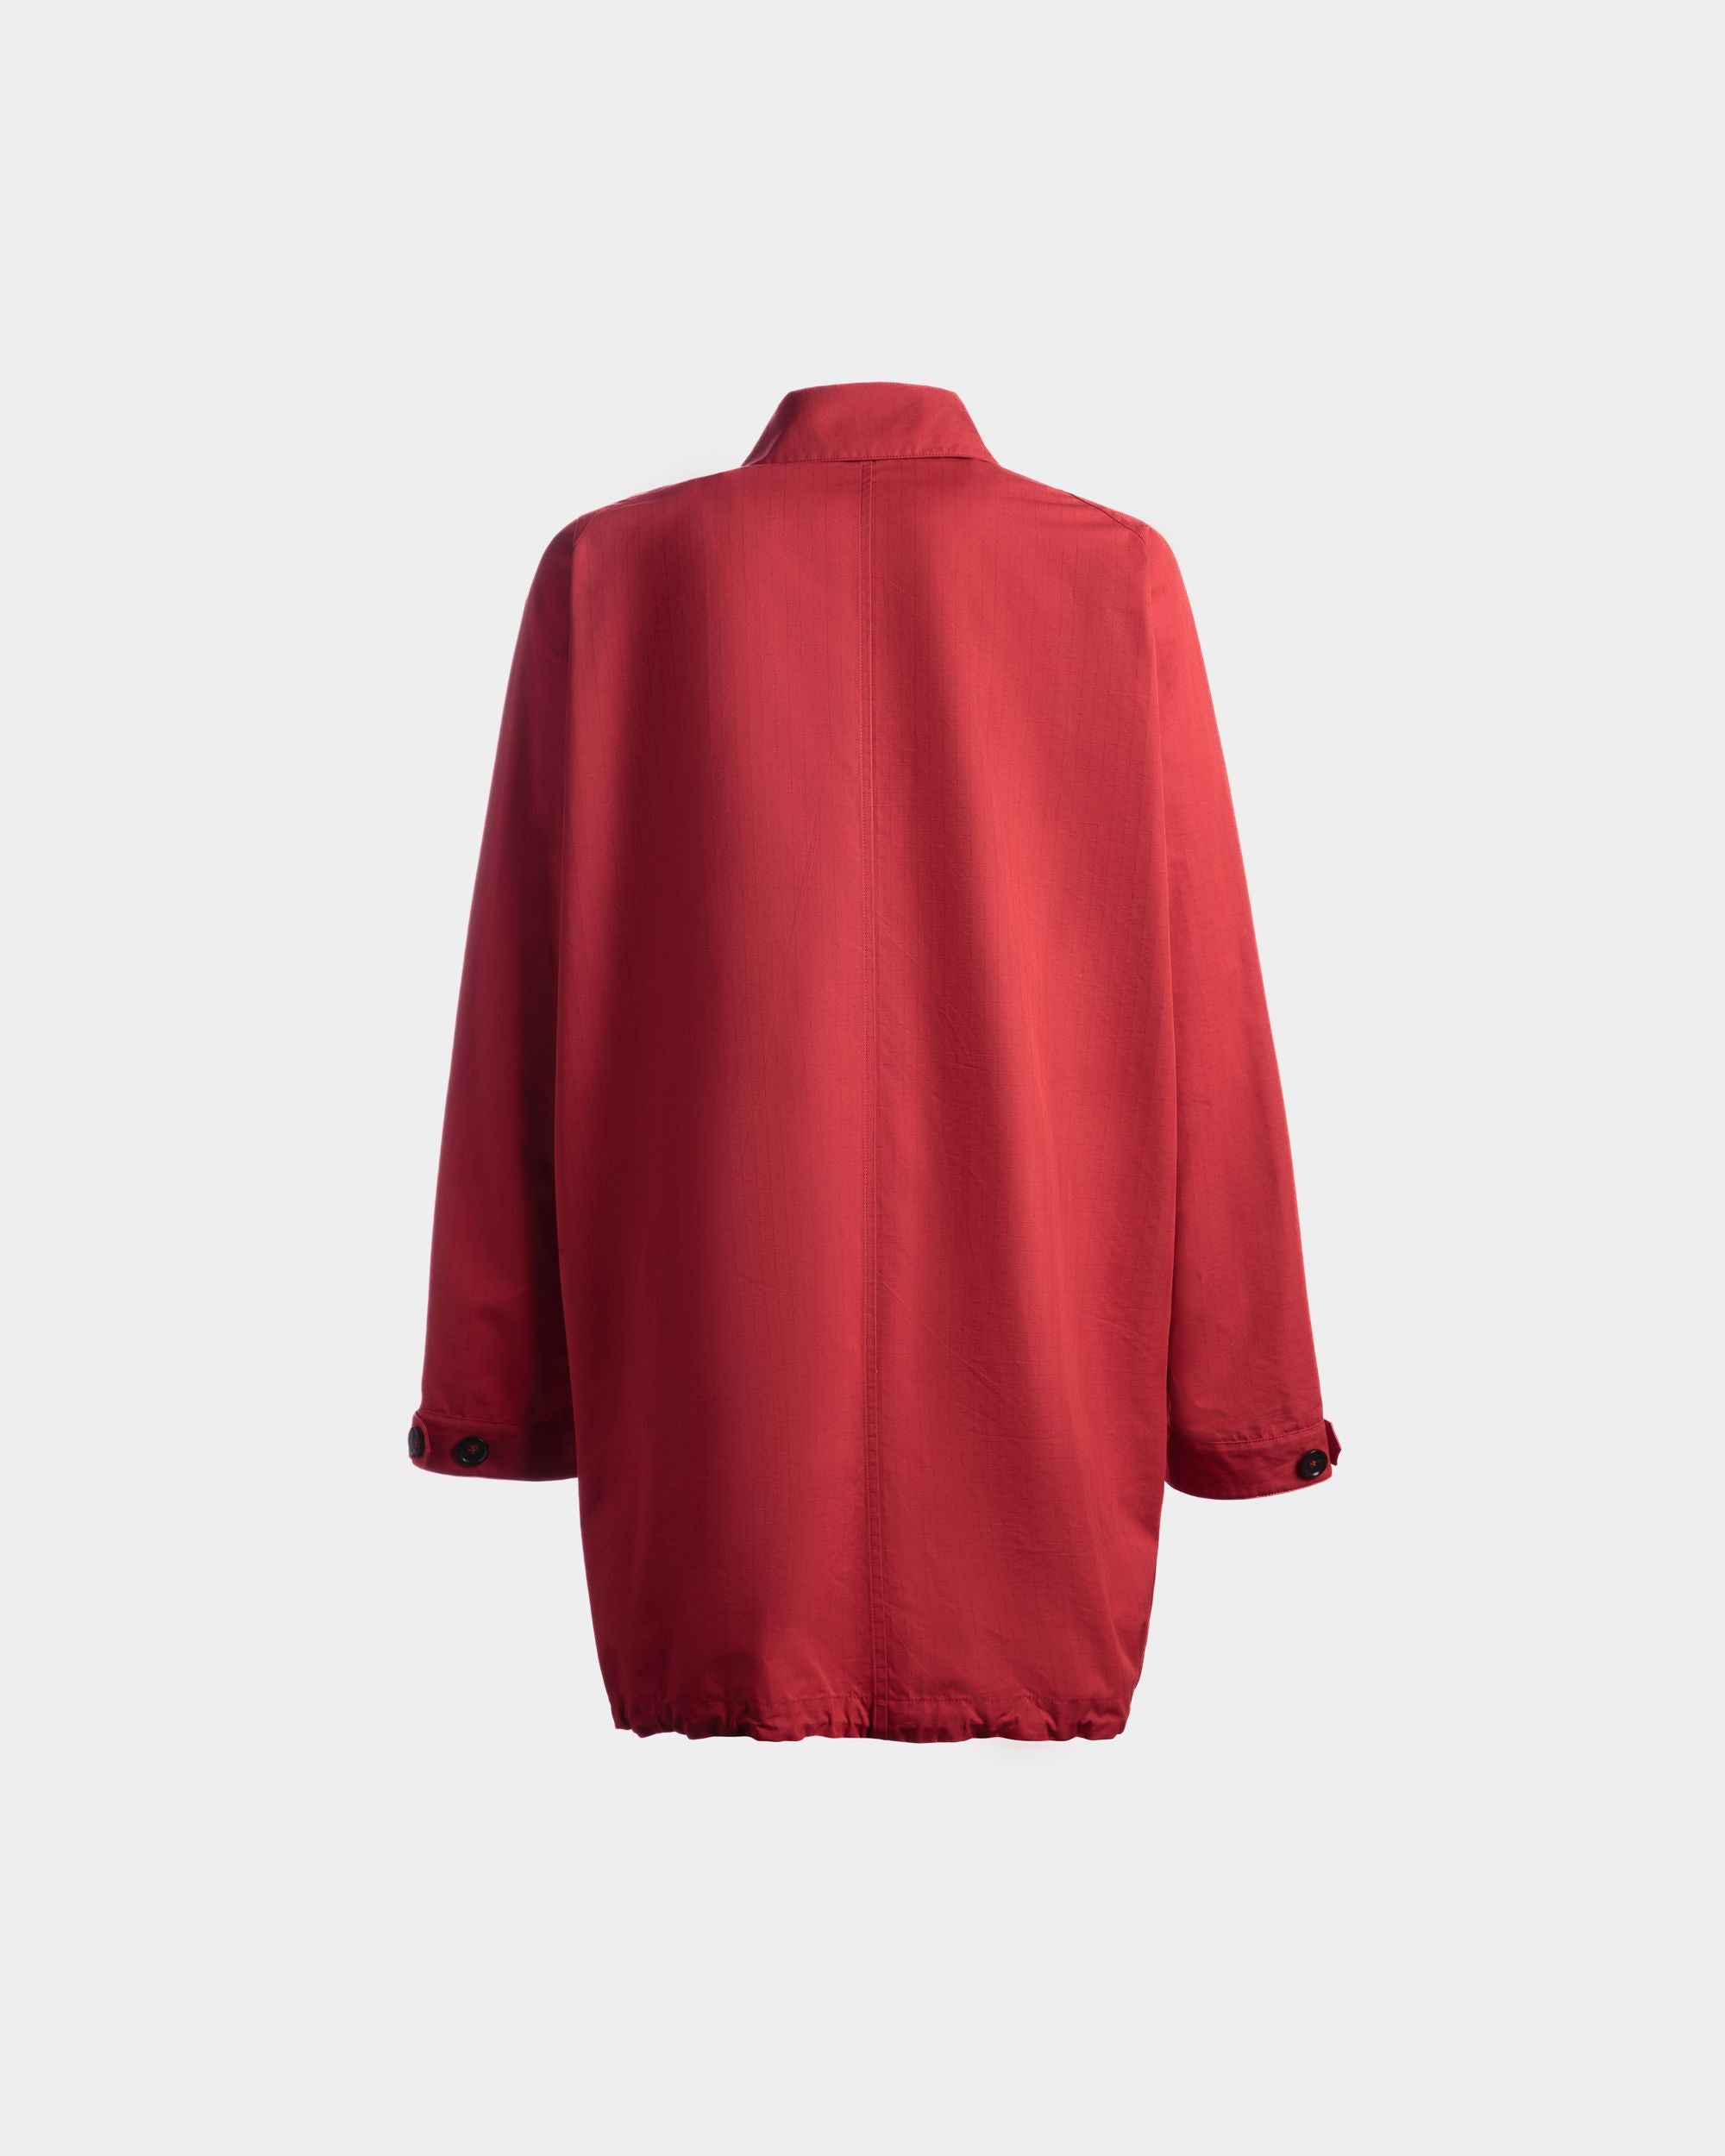 Men's Coat in Candy Red Nylon | Bally | Still Life Back